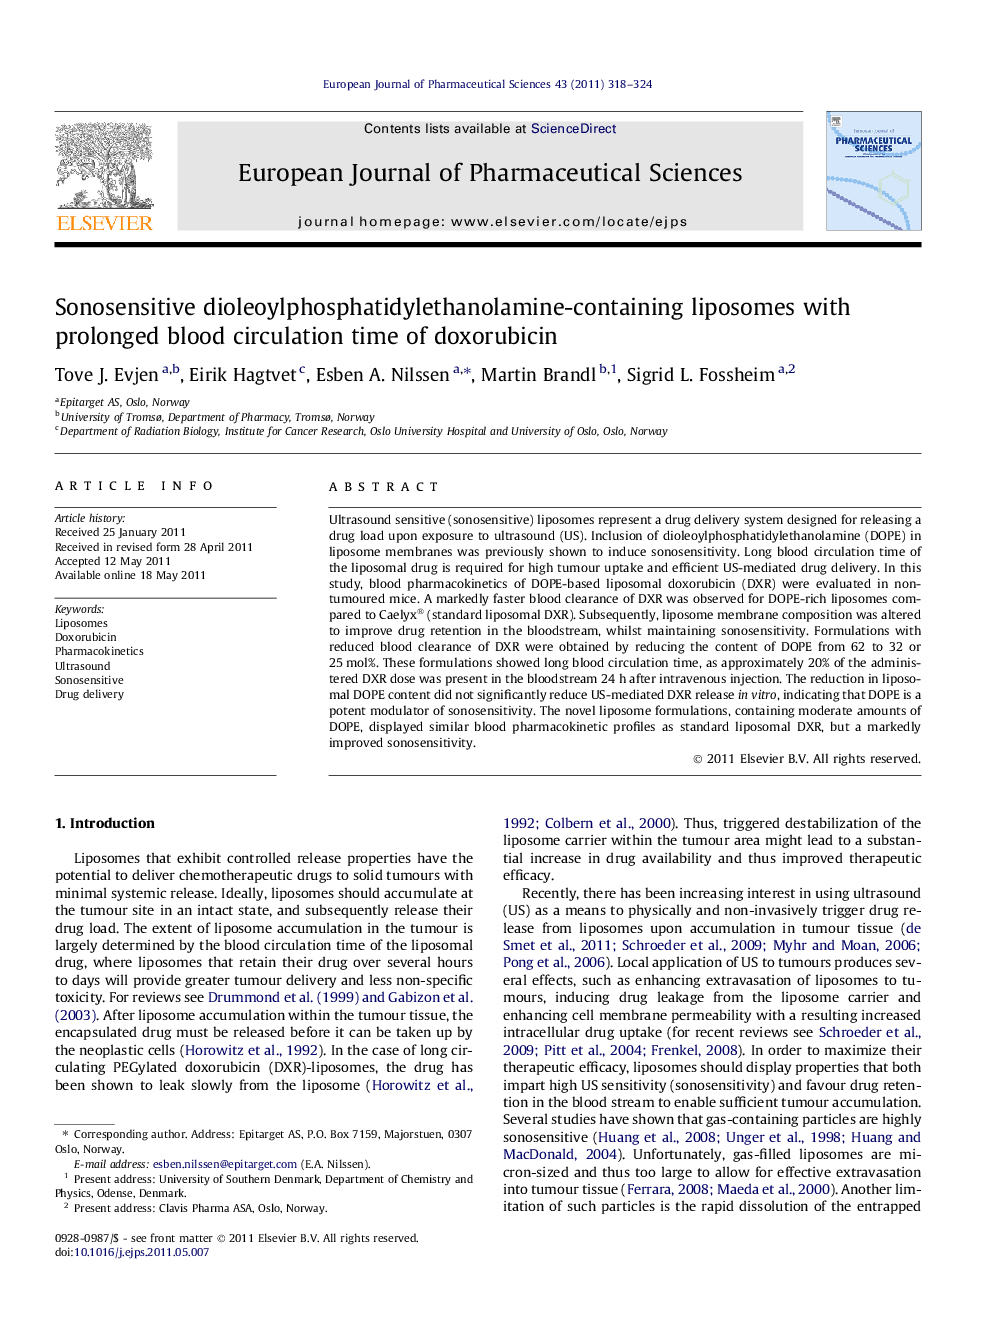 Sonosensitive dioleoylphosphatidylethanolamine-containing liposomes with prolonged blood circulation time of doxorubicin